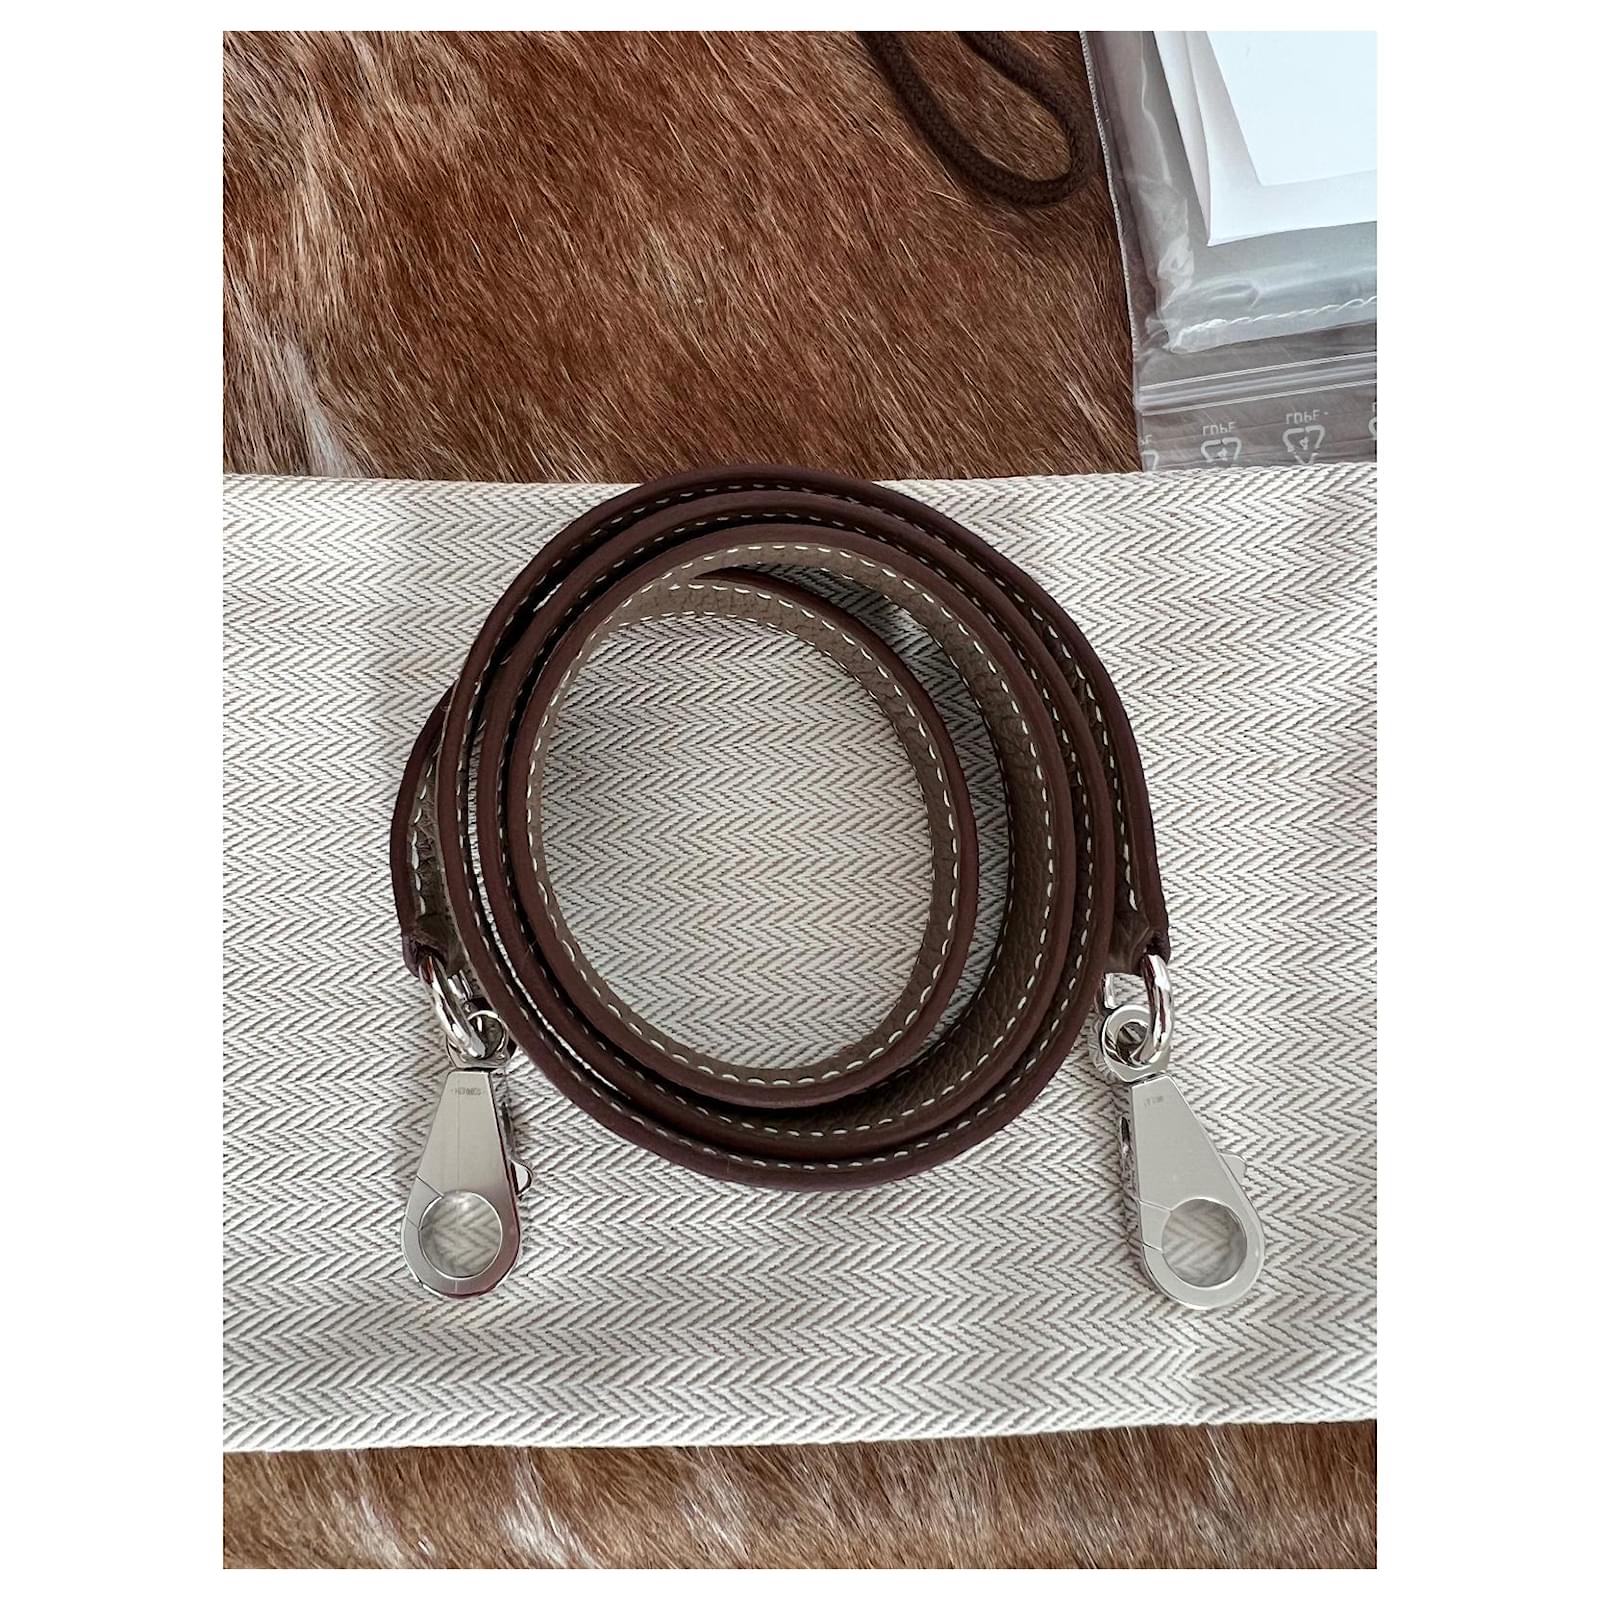 Hermès Etoupe Retourne Kelly 28cm of Togo Leather with Palladium Hardware, Handbags and Accessories Online, 2019